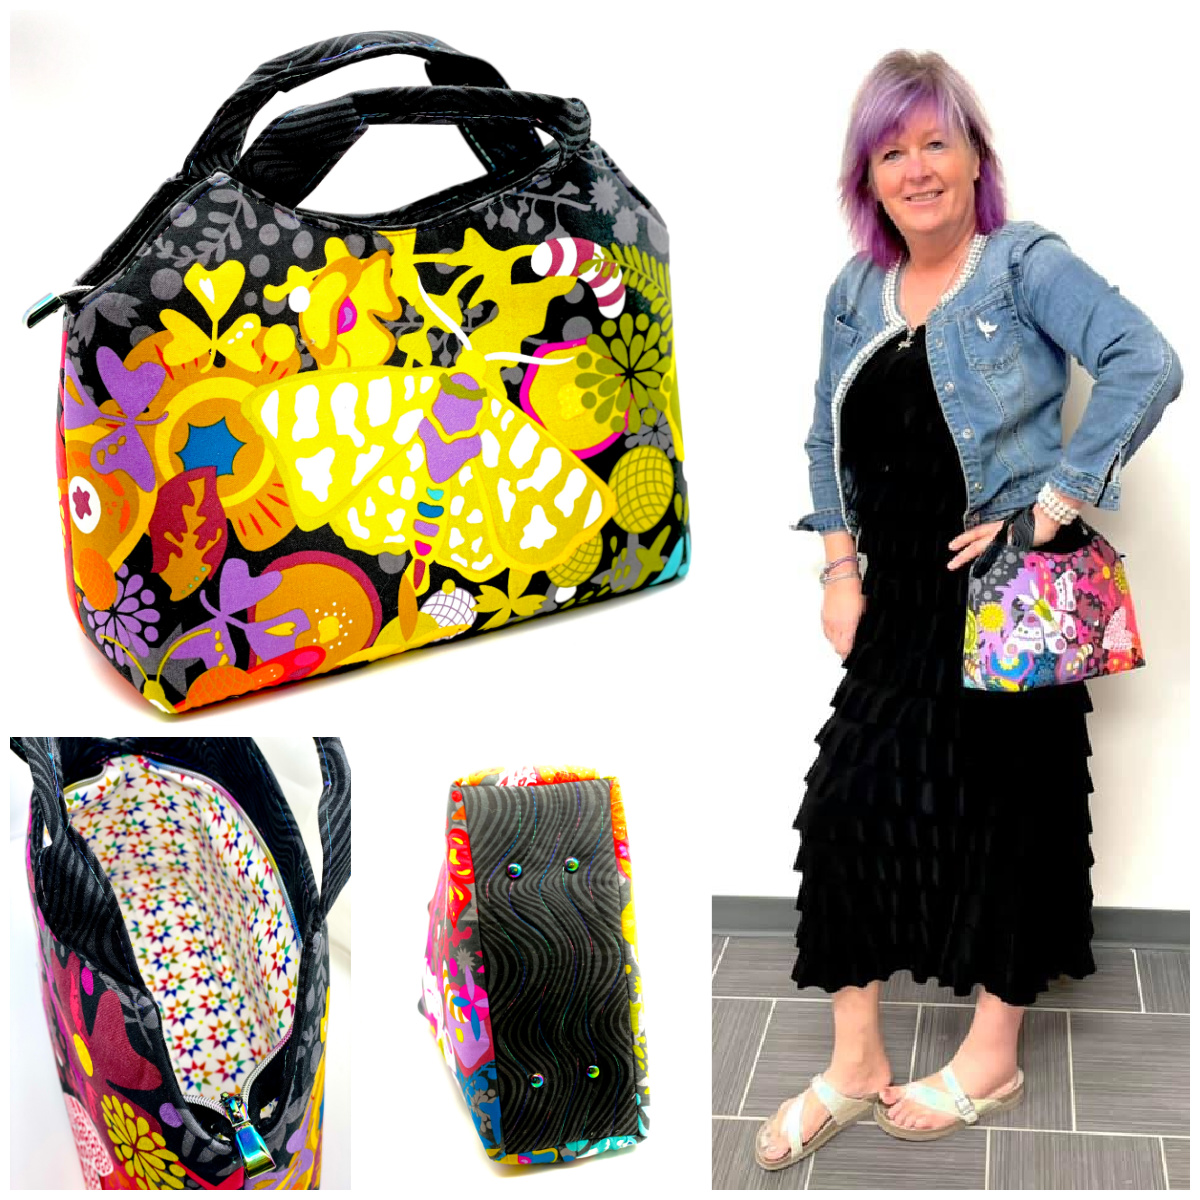 Hope Handbag from Sewing Patterns by Junyuan 
